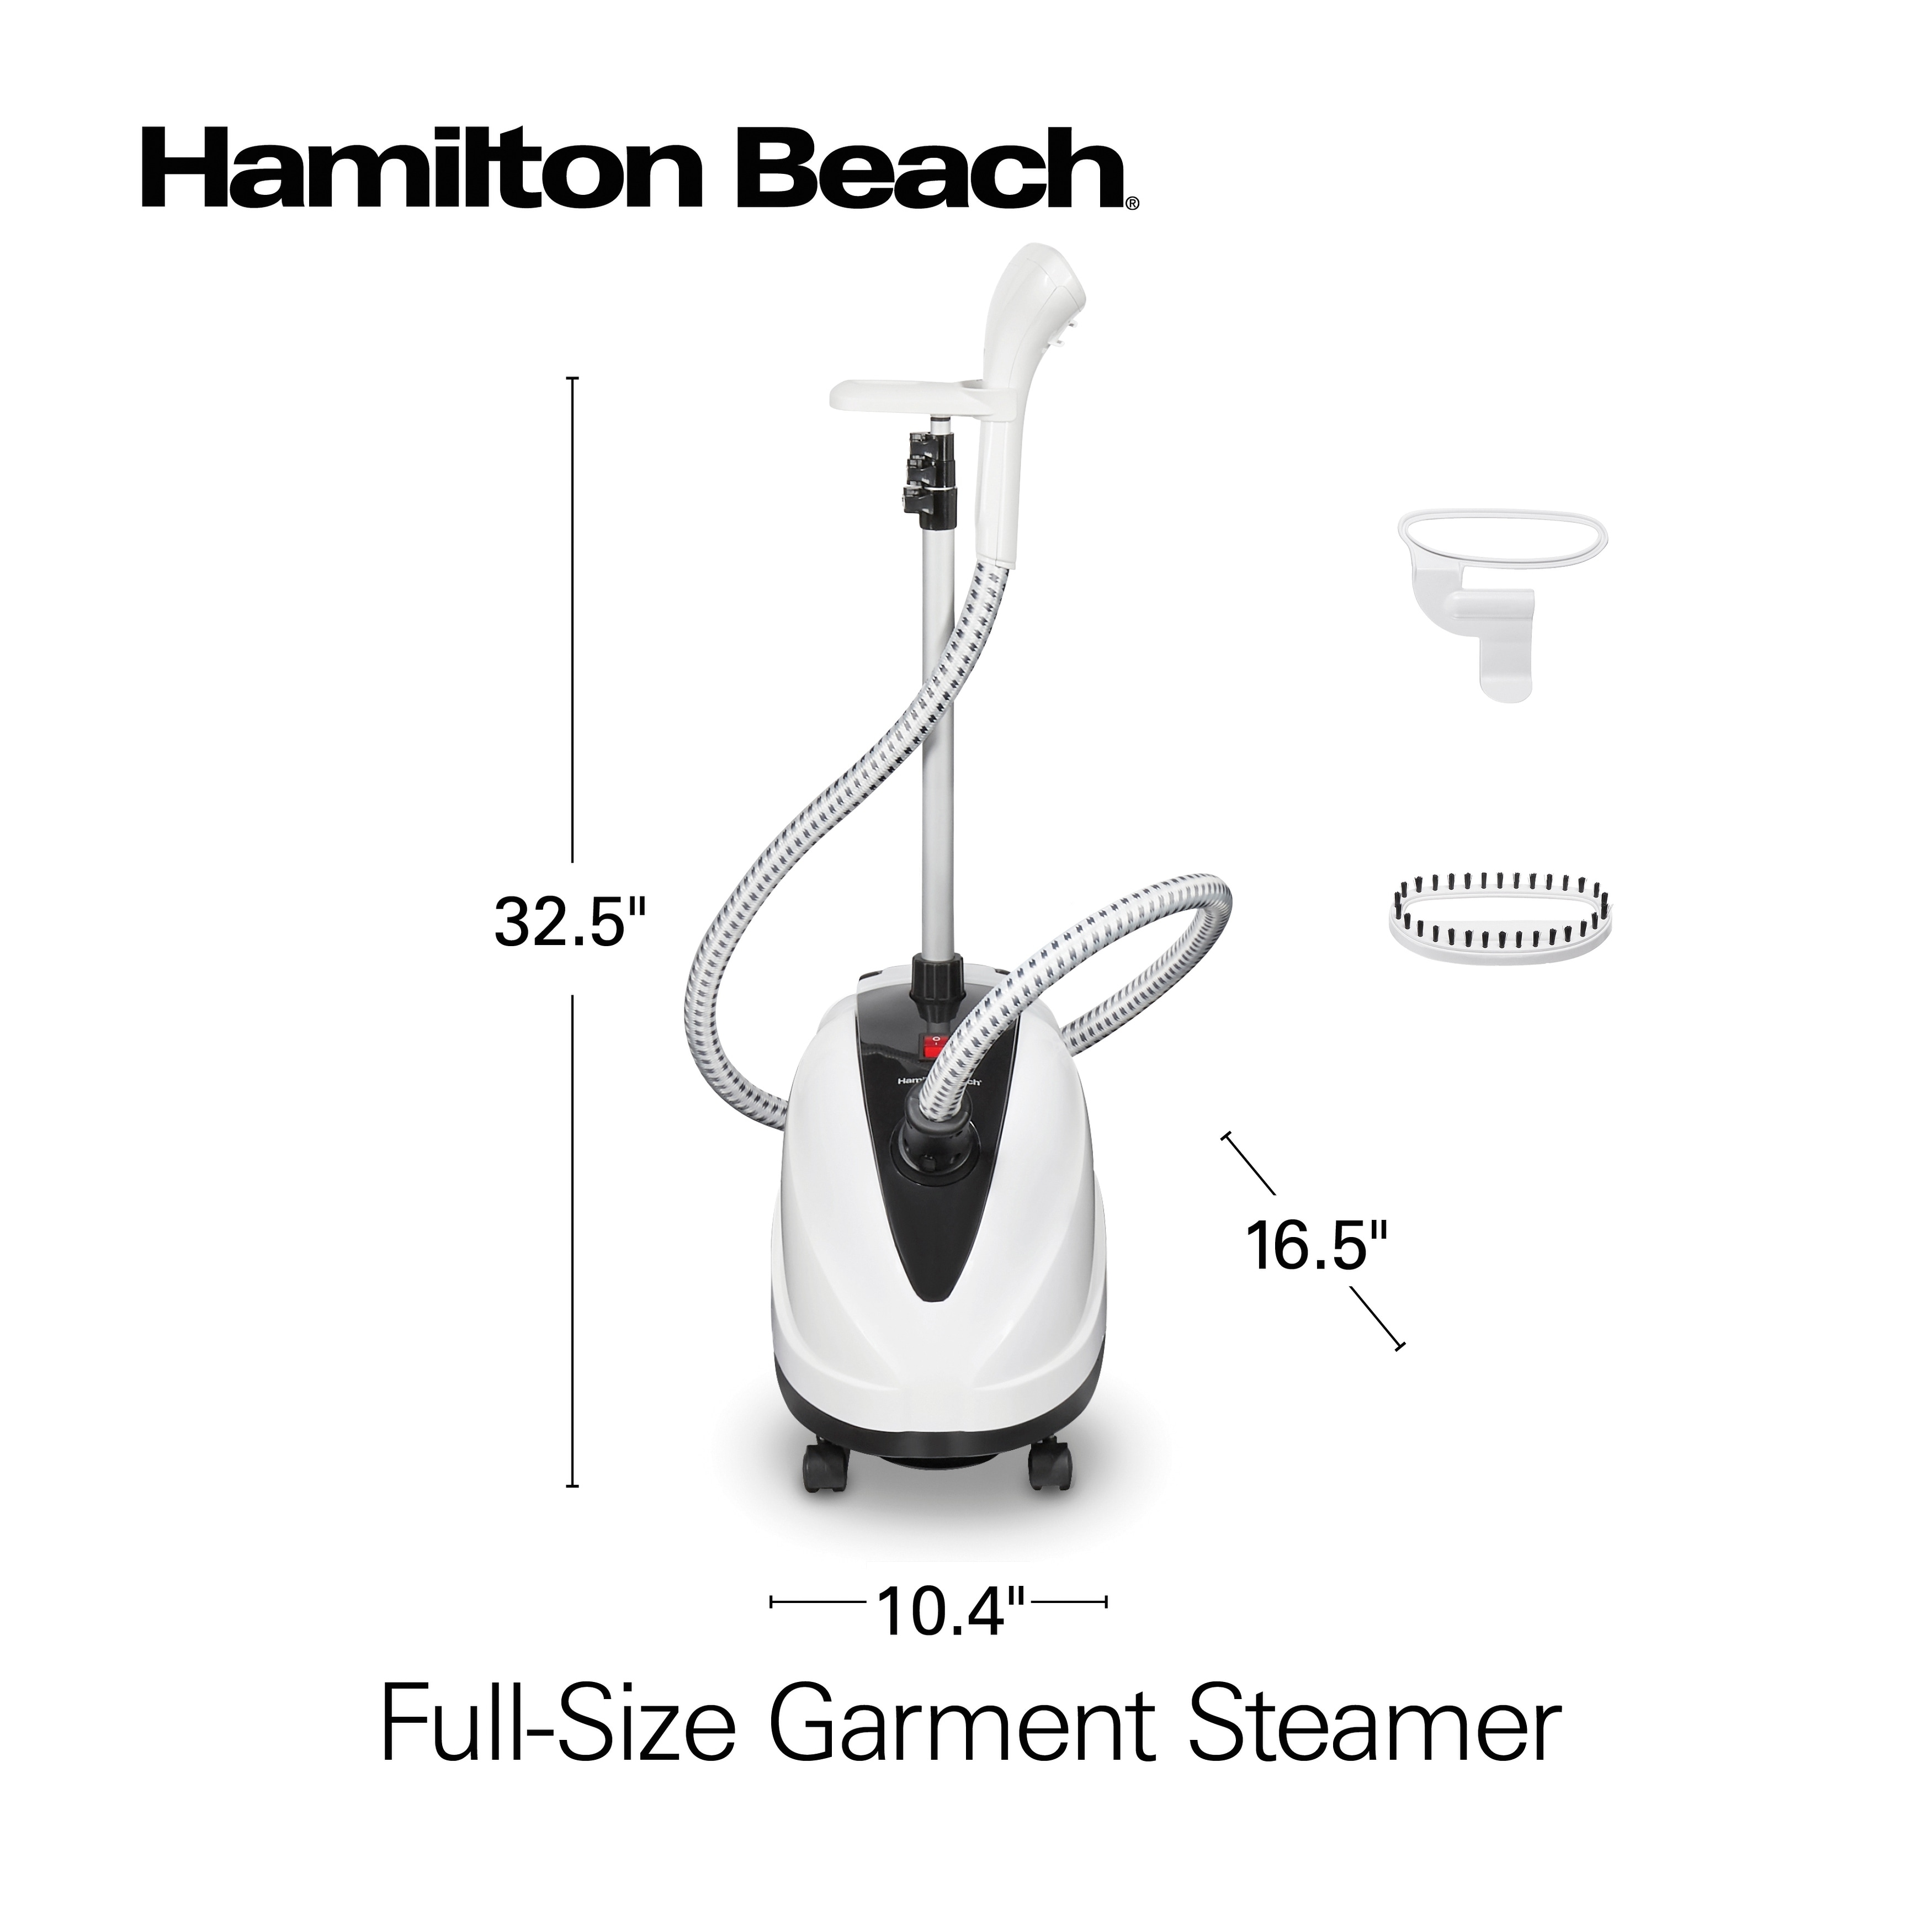 Hamilton Beach Full-Size Garment Steamer - Bed Bath & Beyond - 31764859